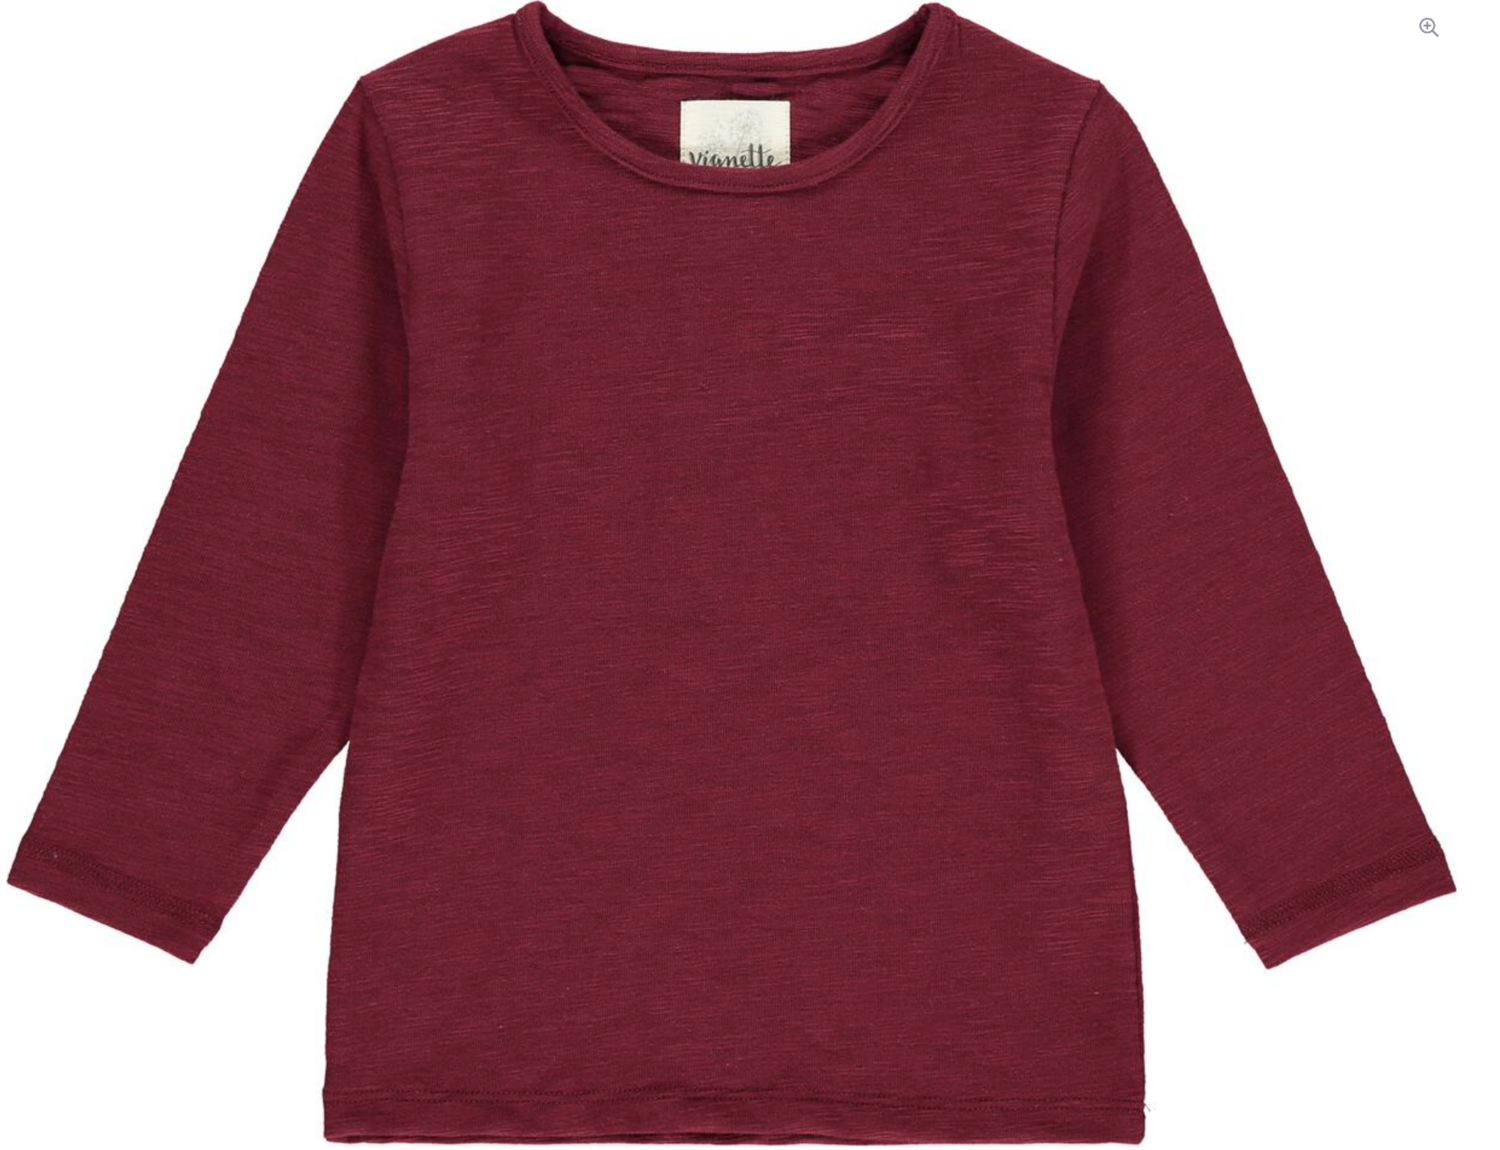 Reese T-shirt in burgundy